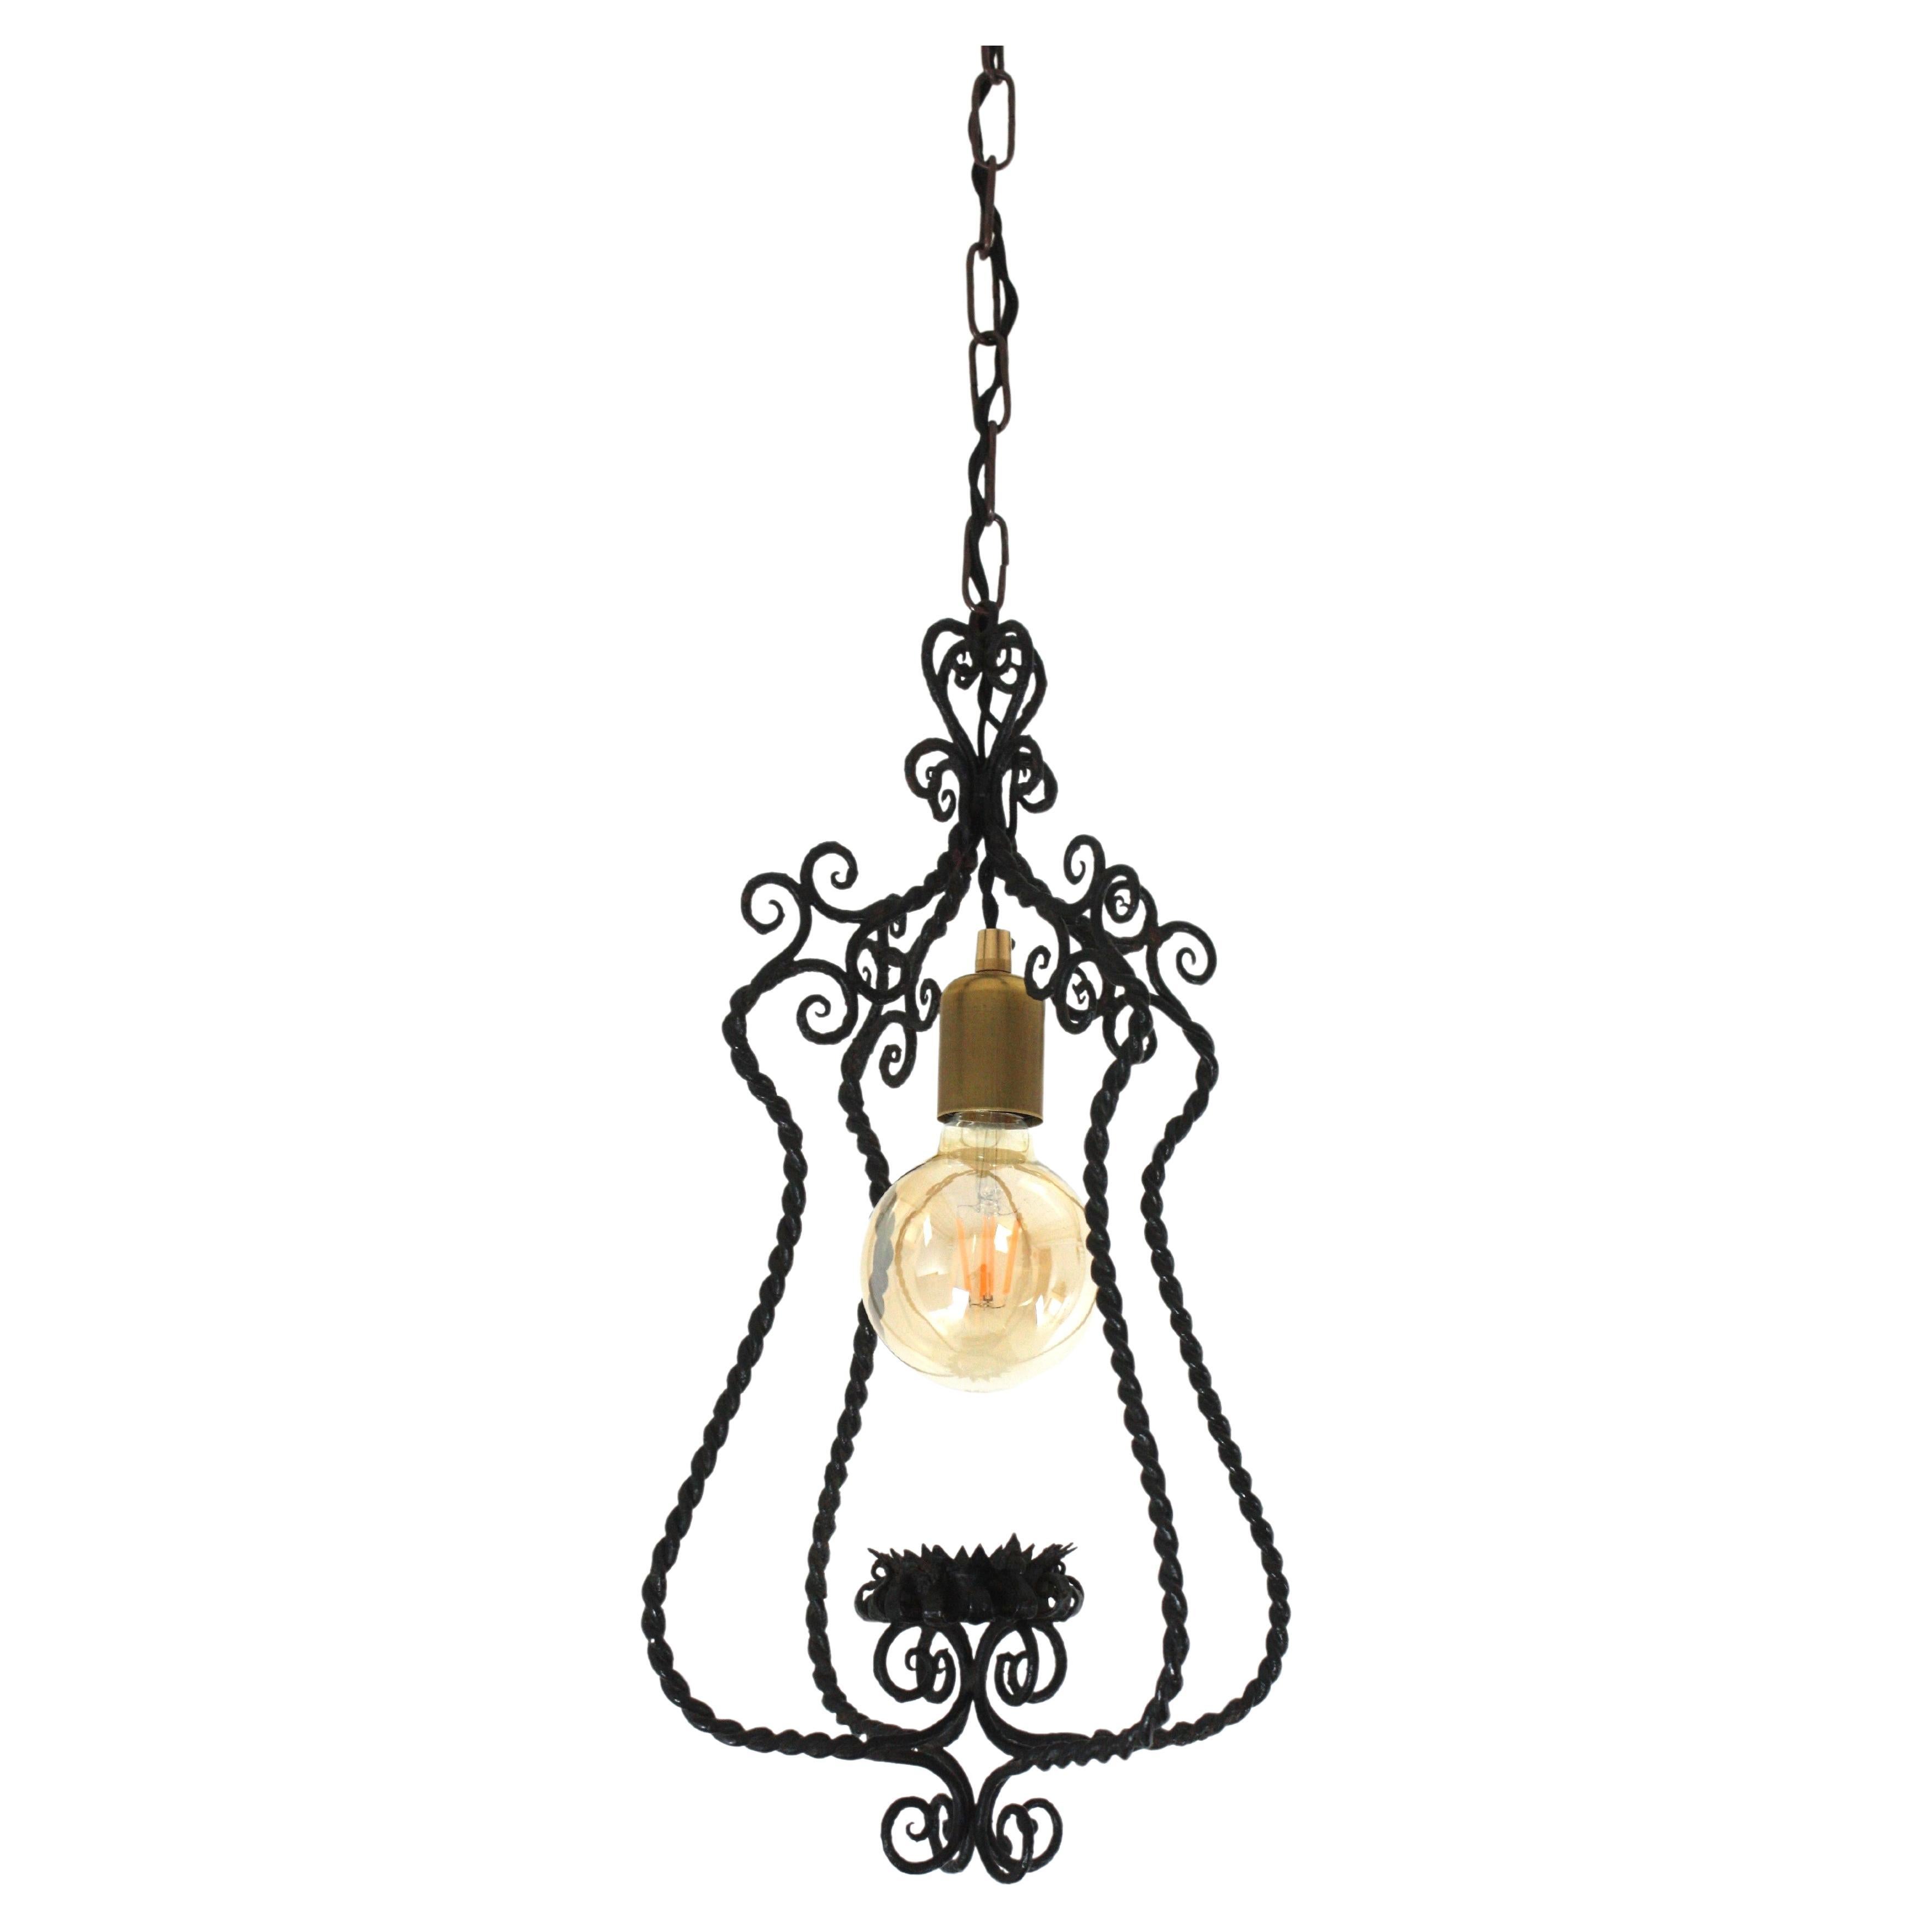 Spanish Lantern Pendant Lamp in Wrought Iron, Scroll Twisting Design, 1940s